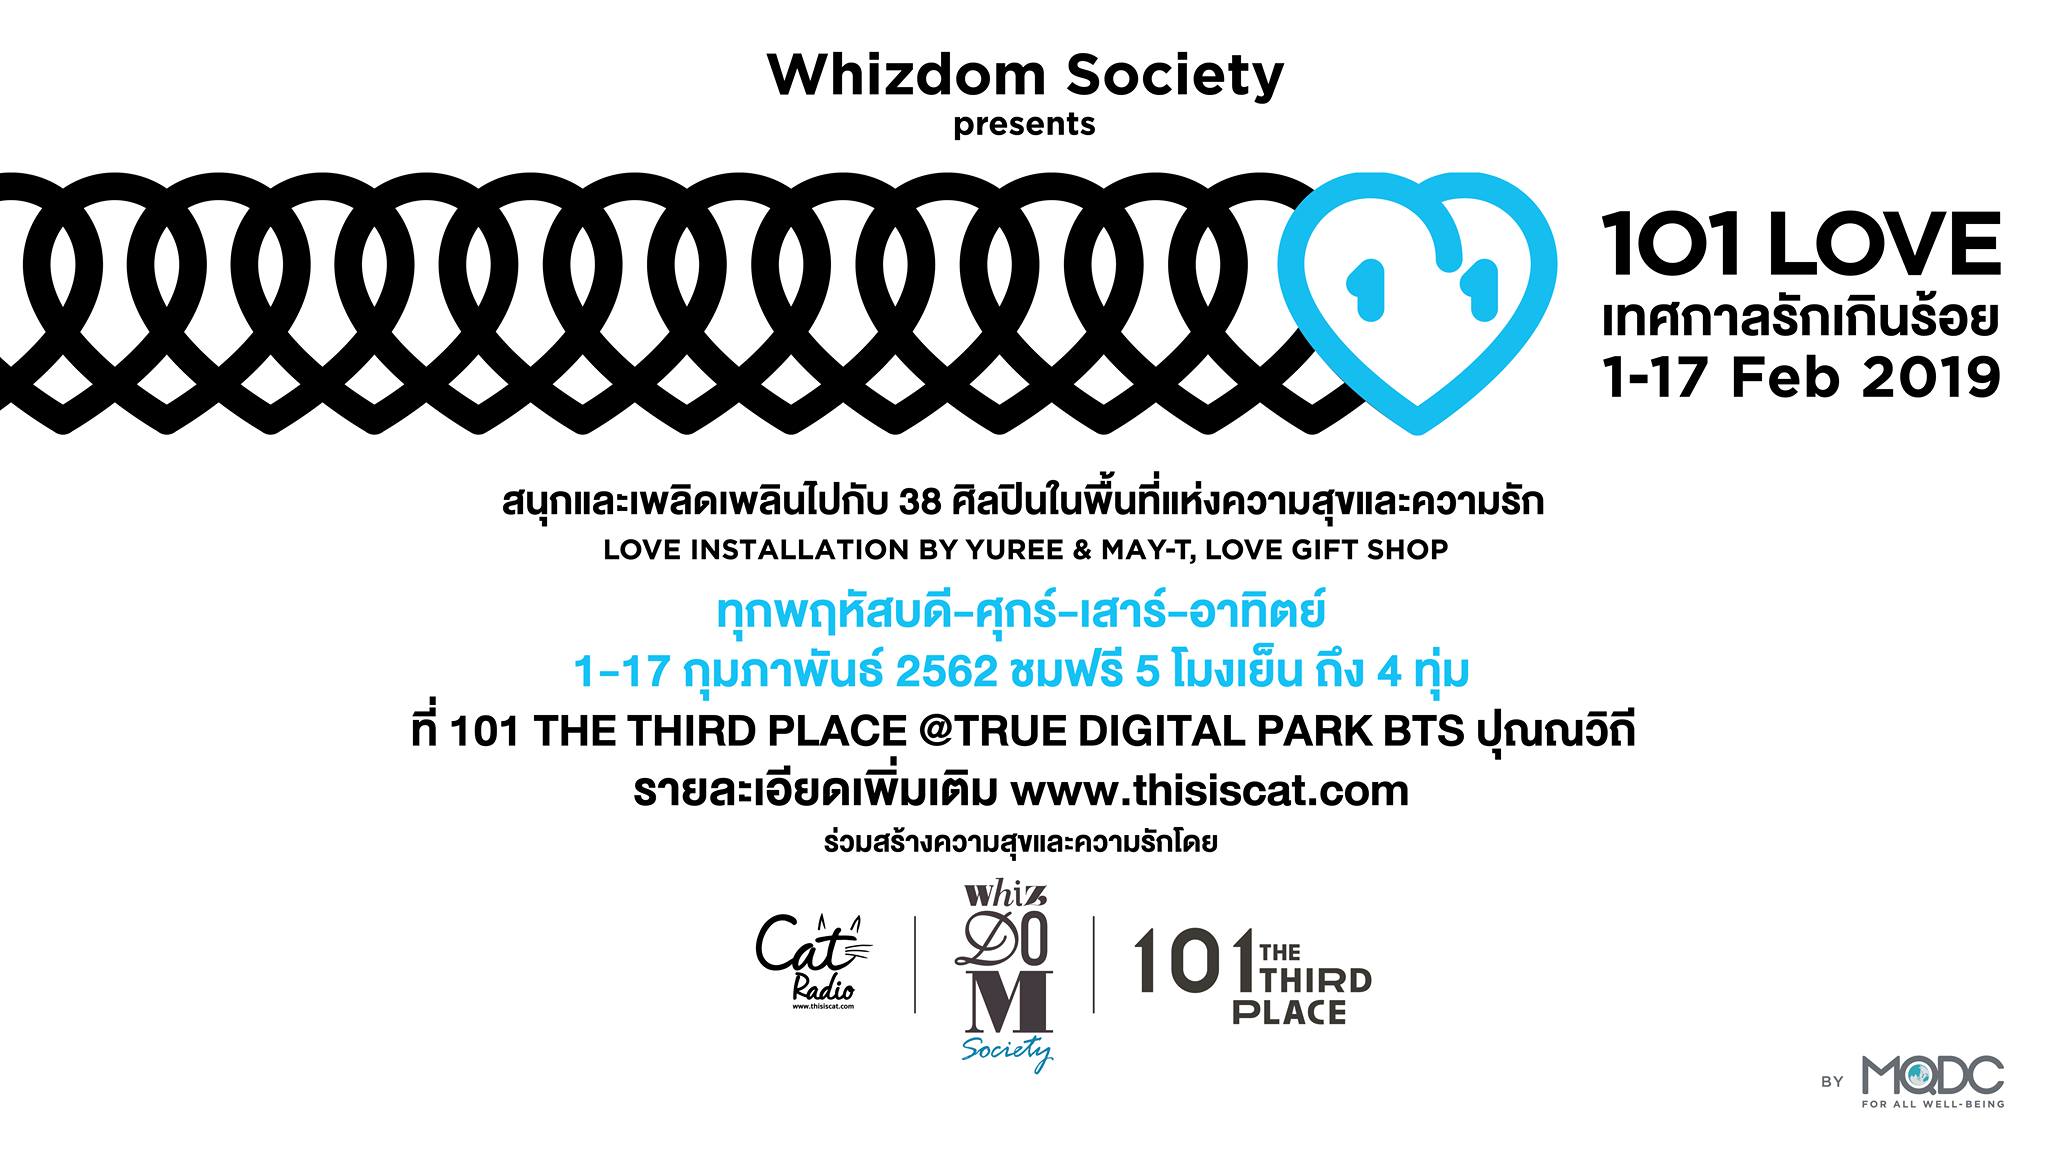 Whizdom Society Presents 101 Love เทศกาลรักเกินร้อย